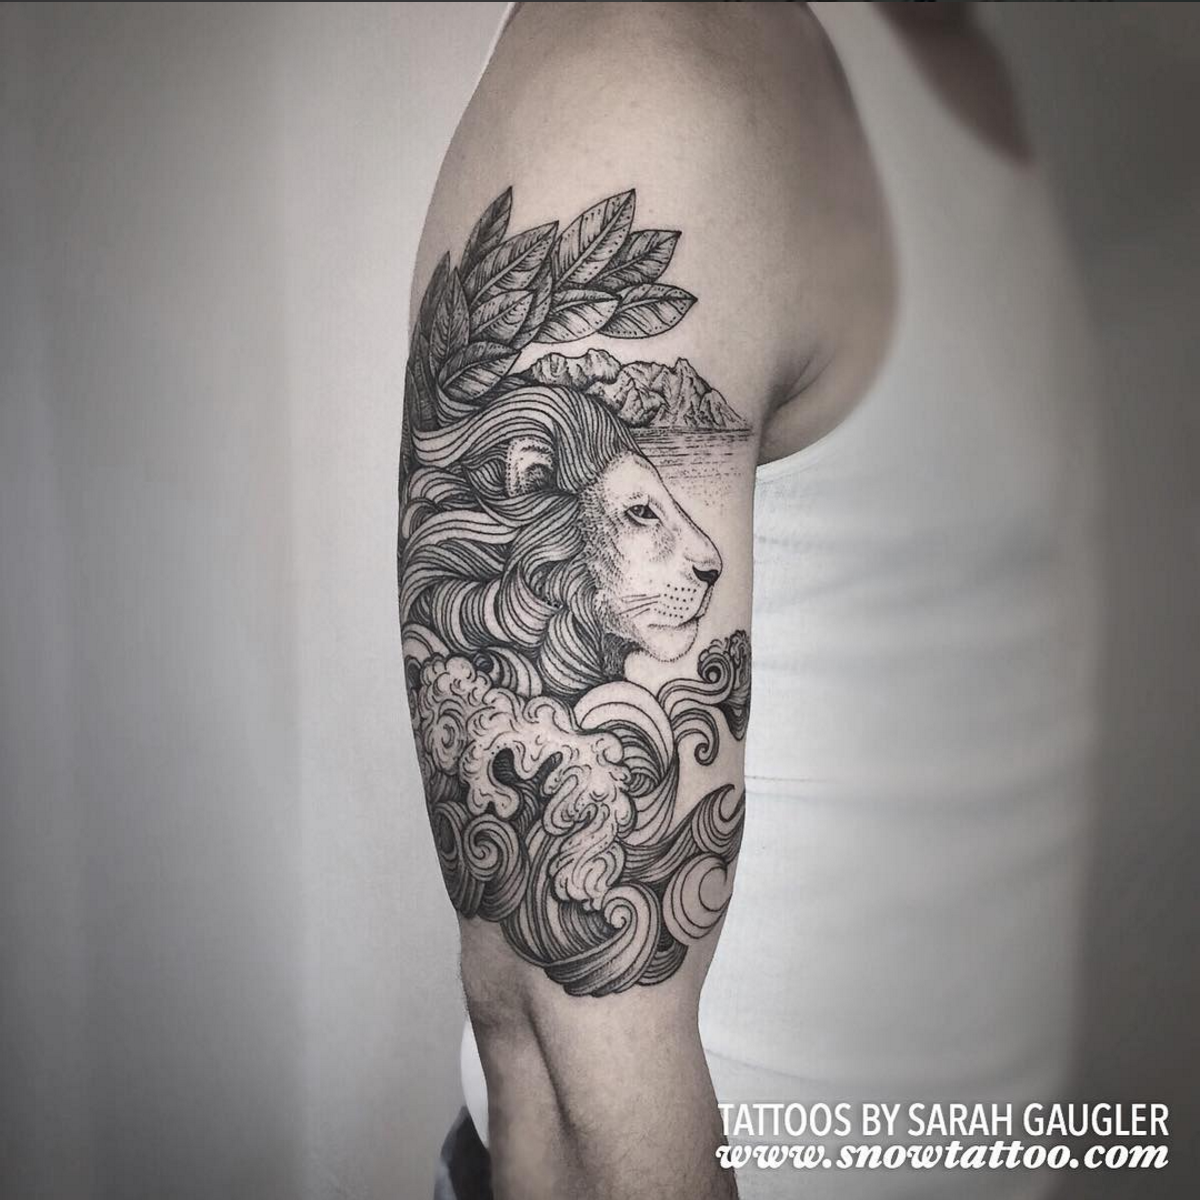 Sarah Gaugler Snow Tattoo Custom Lion Leo Sleeve New York Best Tattoos Best Tattoo Artist NYC.png